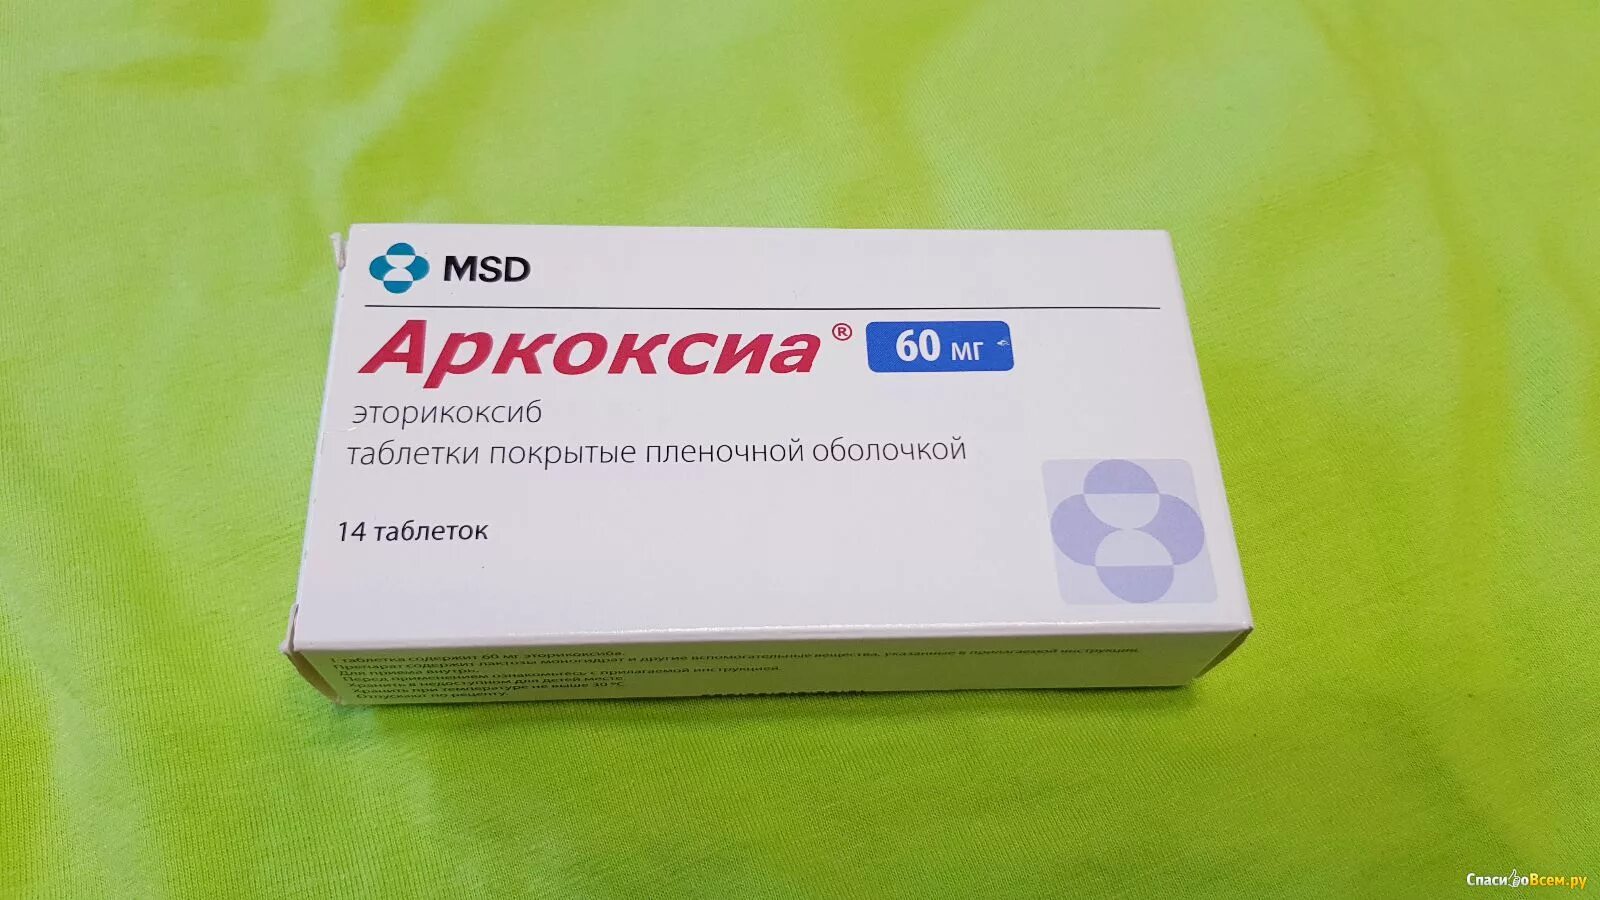 Аркоксиа действует через. Аркоксиа 60 мг. Эторикоксиб аркоксиа. Эторикоксиб 120 мг. Аркоксиа 90 мг.